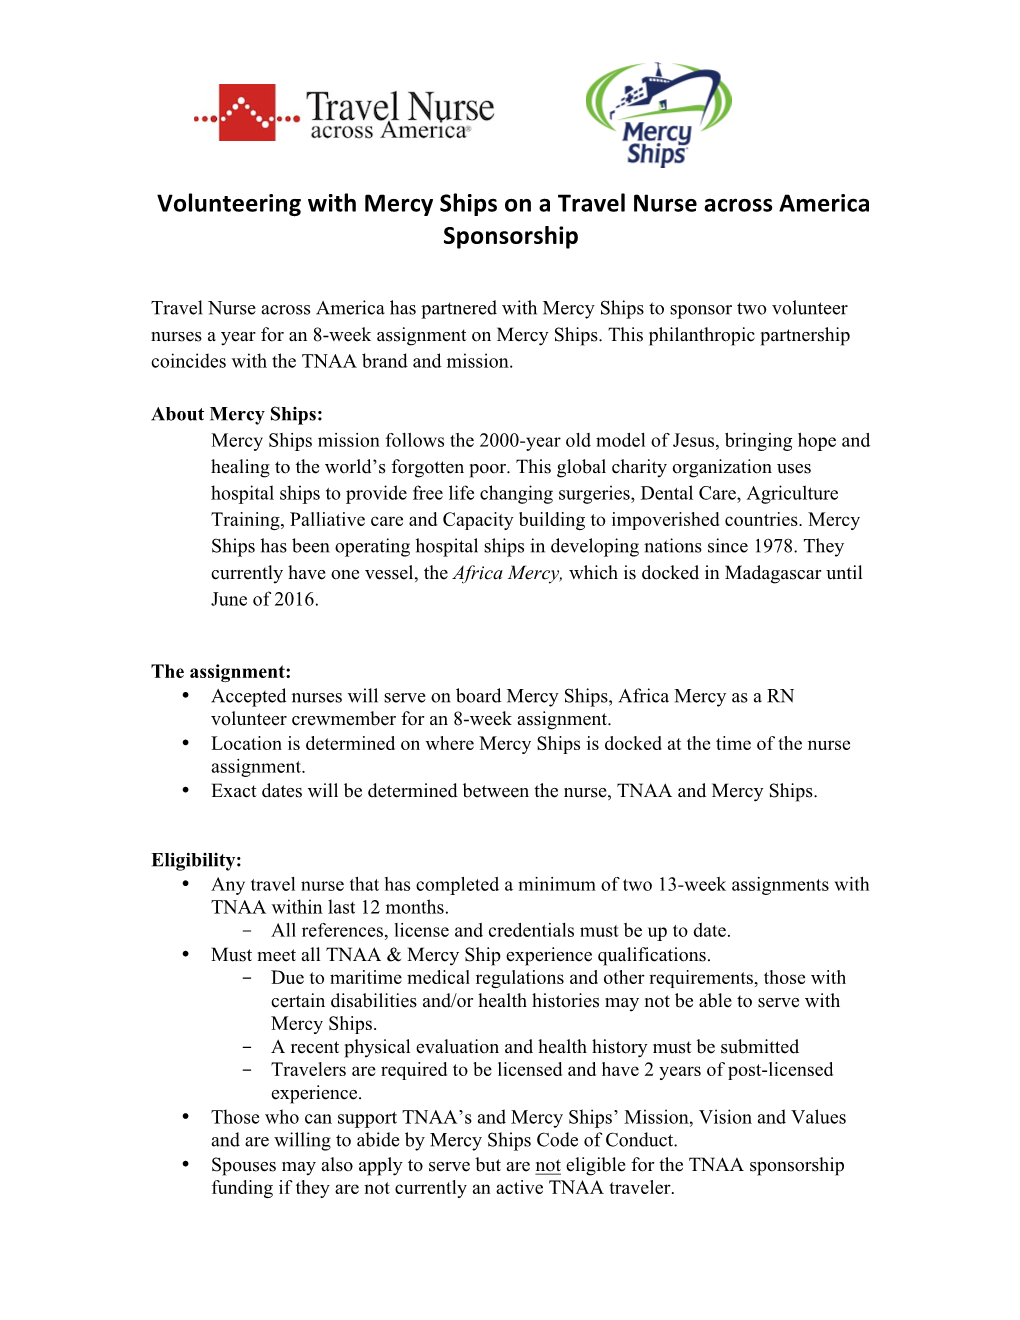 Volunteering with Mercy Ships on a Travel Nurse Across America Sponsorship